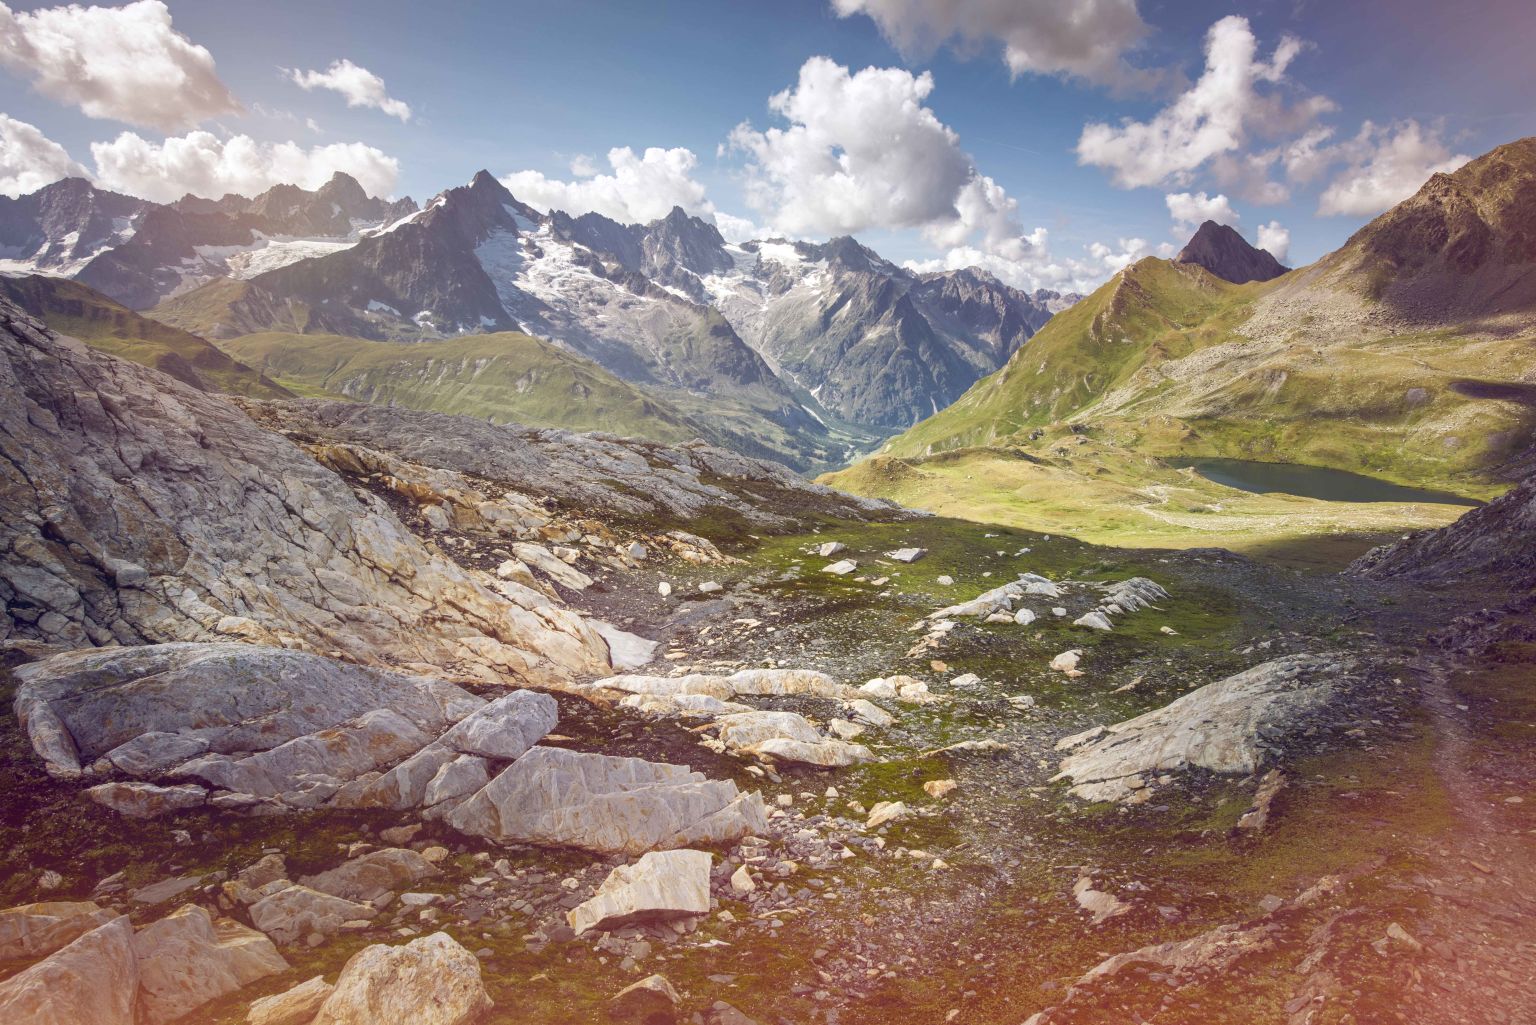 Mountain landscape with stones and lake, Val Ferret, La Fouly, Valais, Switzerland